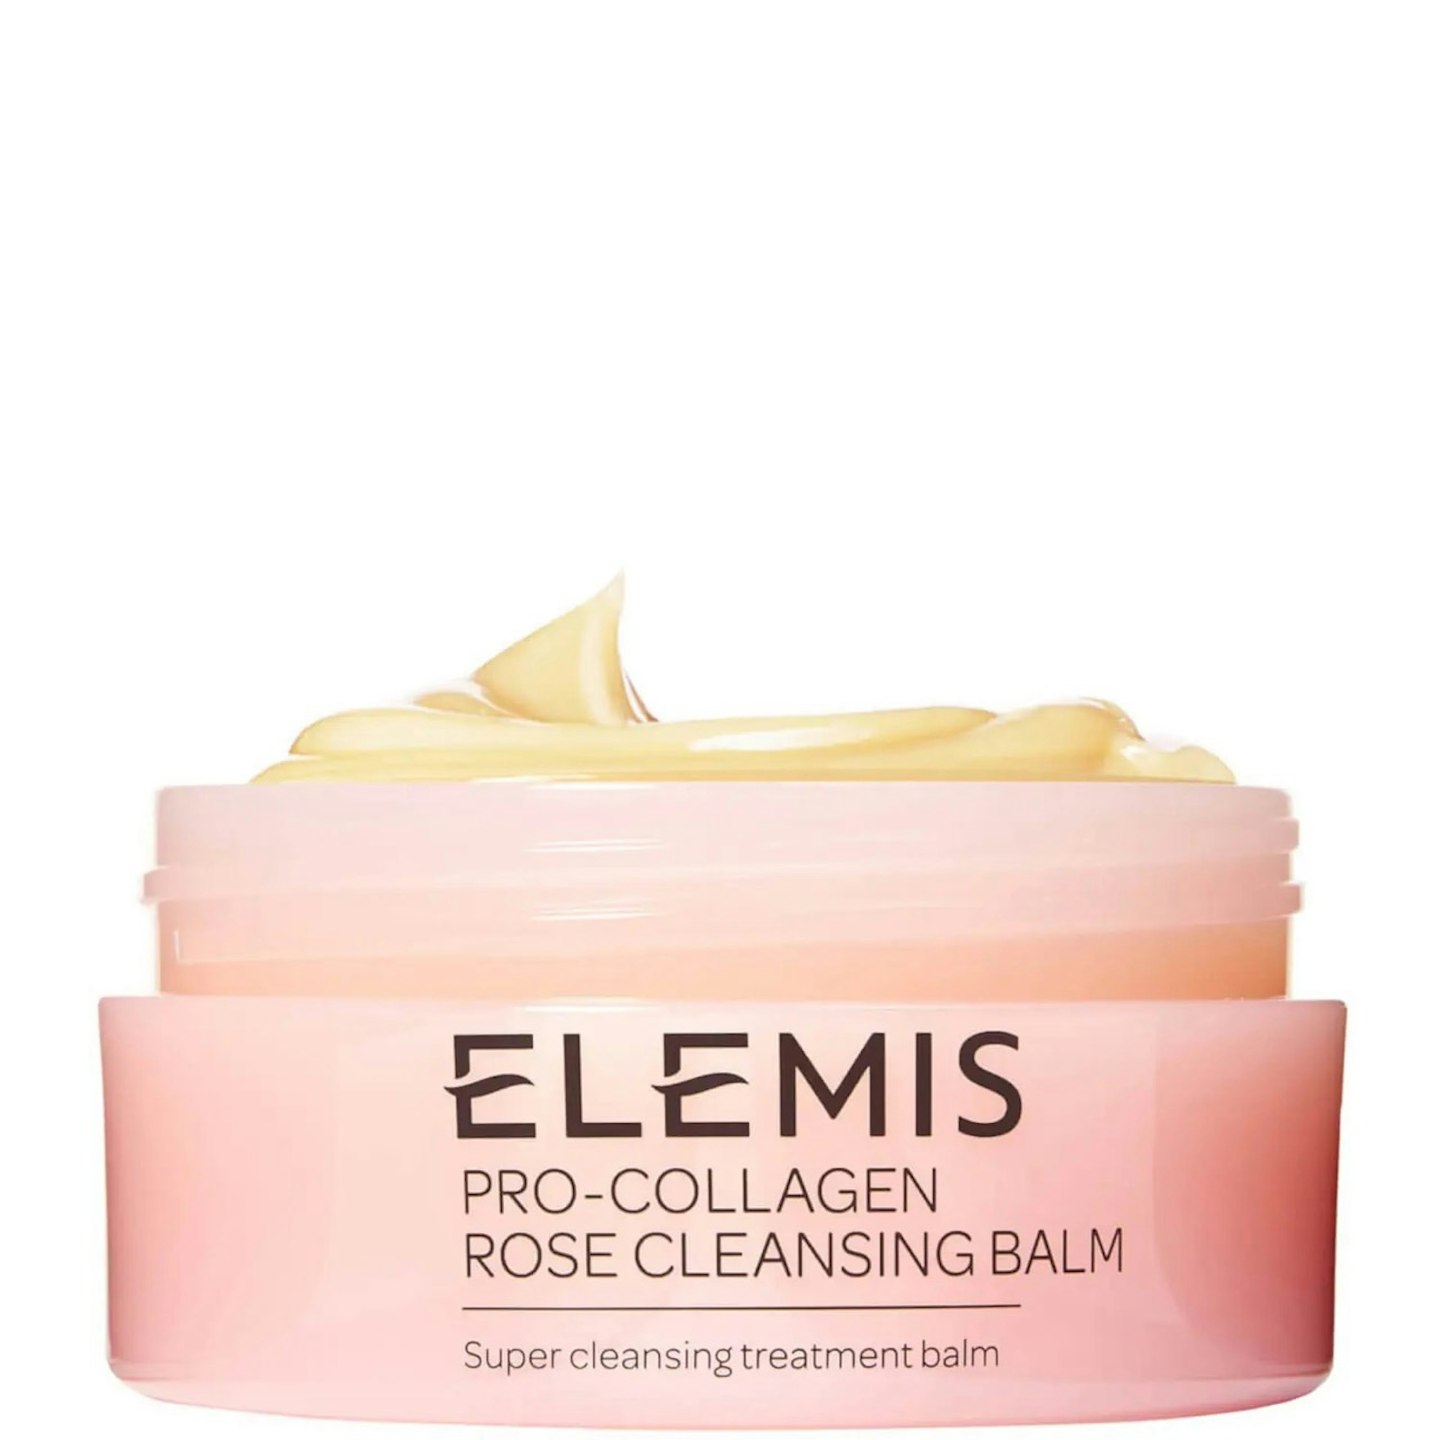 Elemis' Pro-Collagen Rose Cleansing Balm